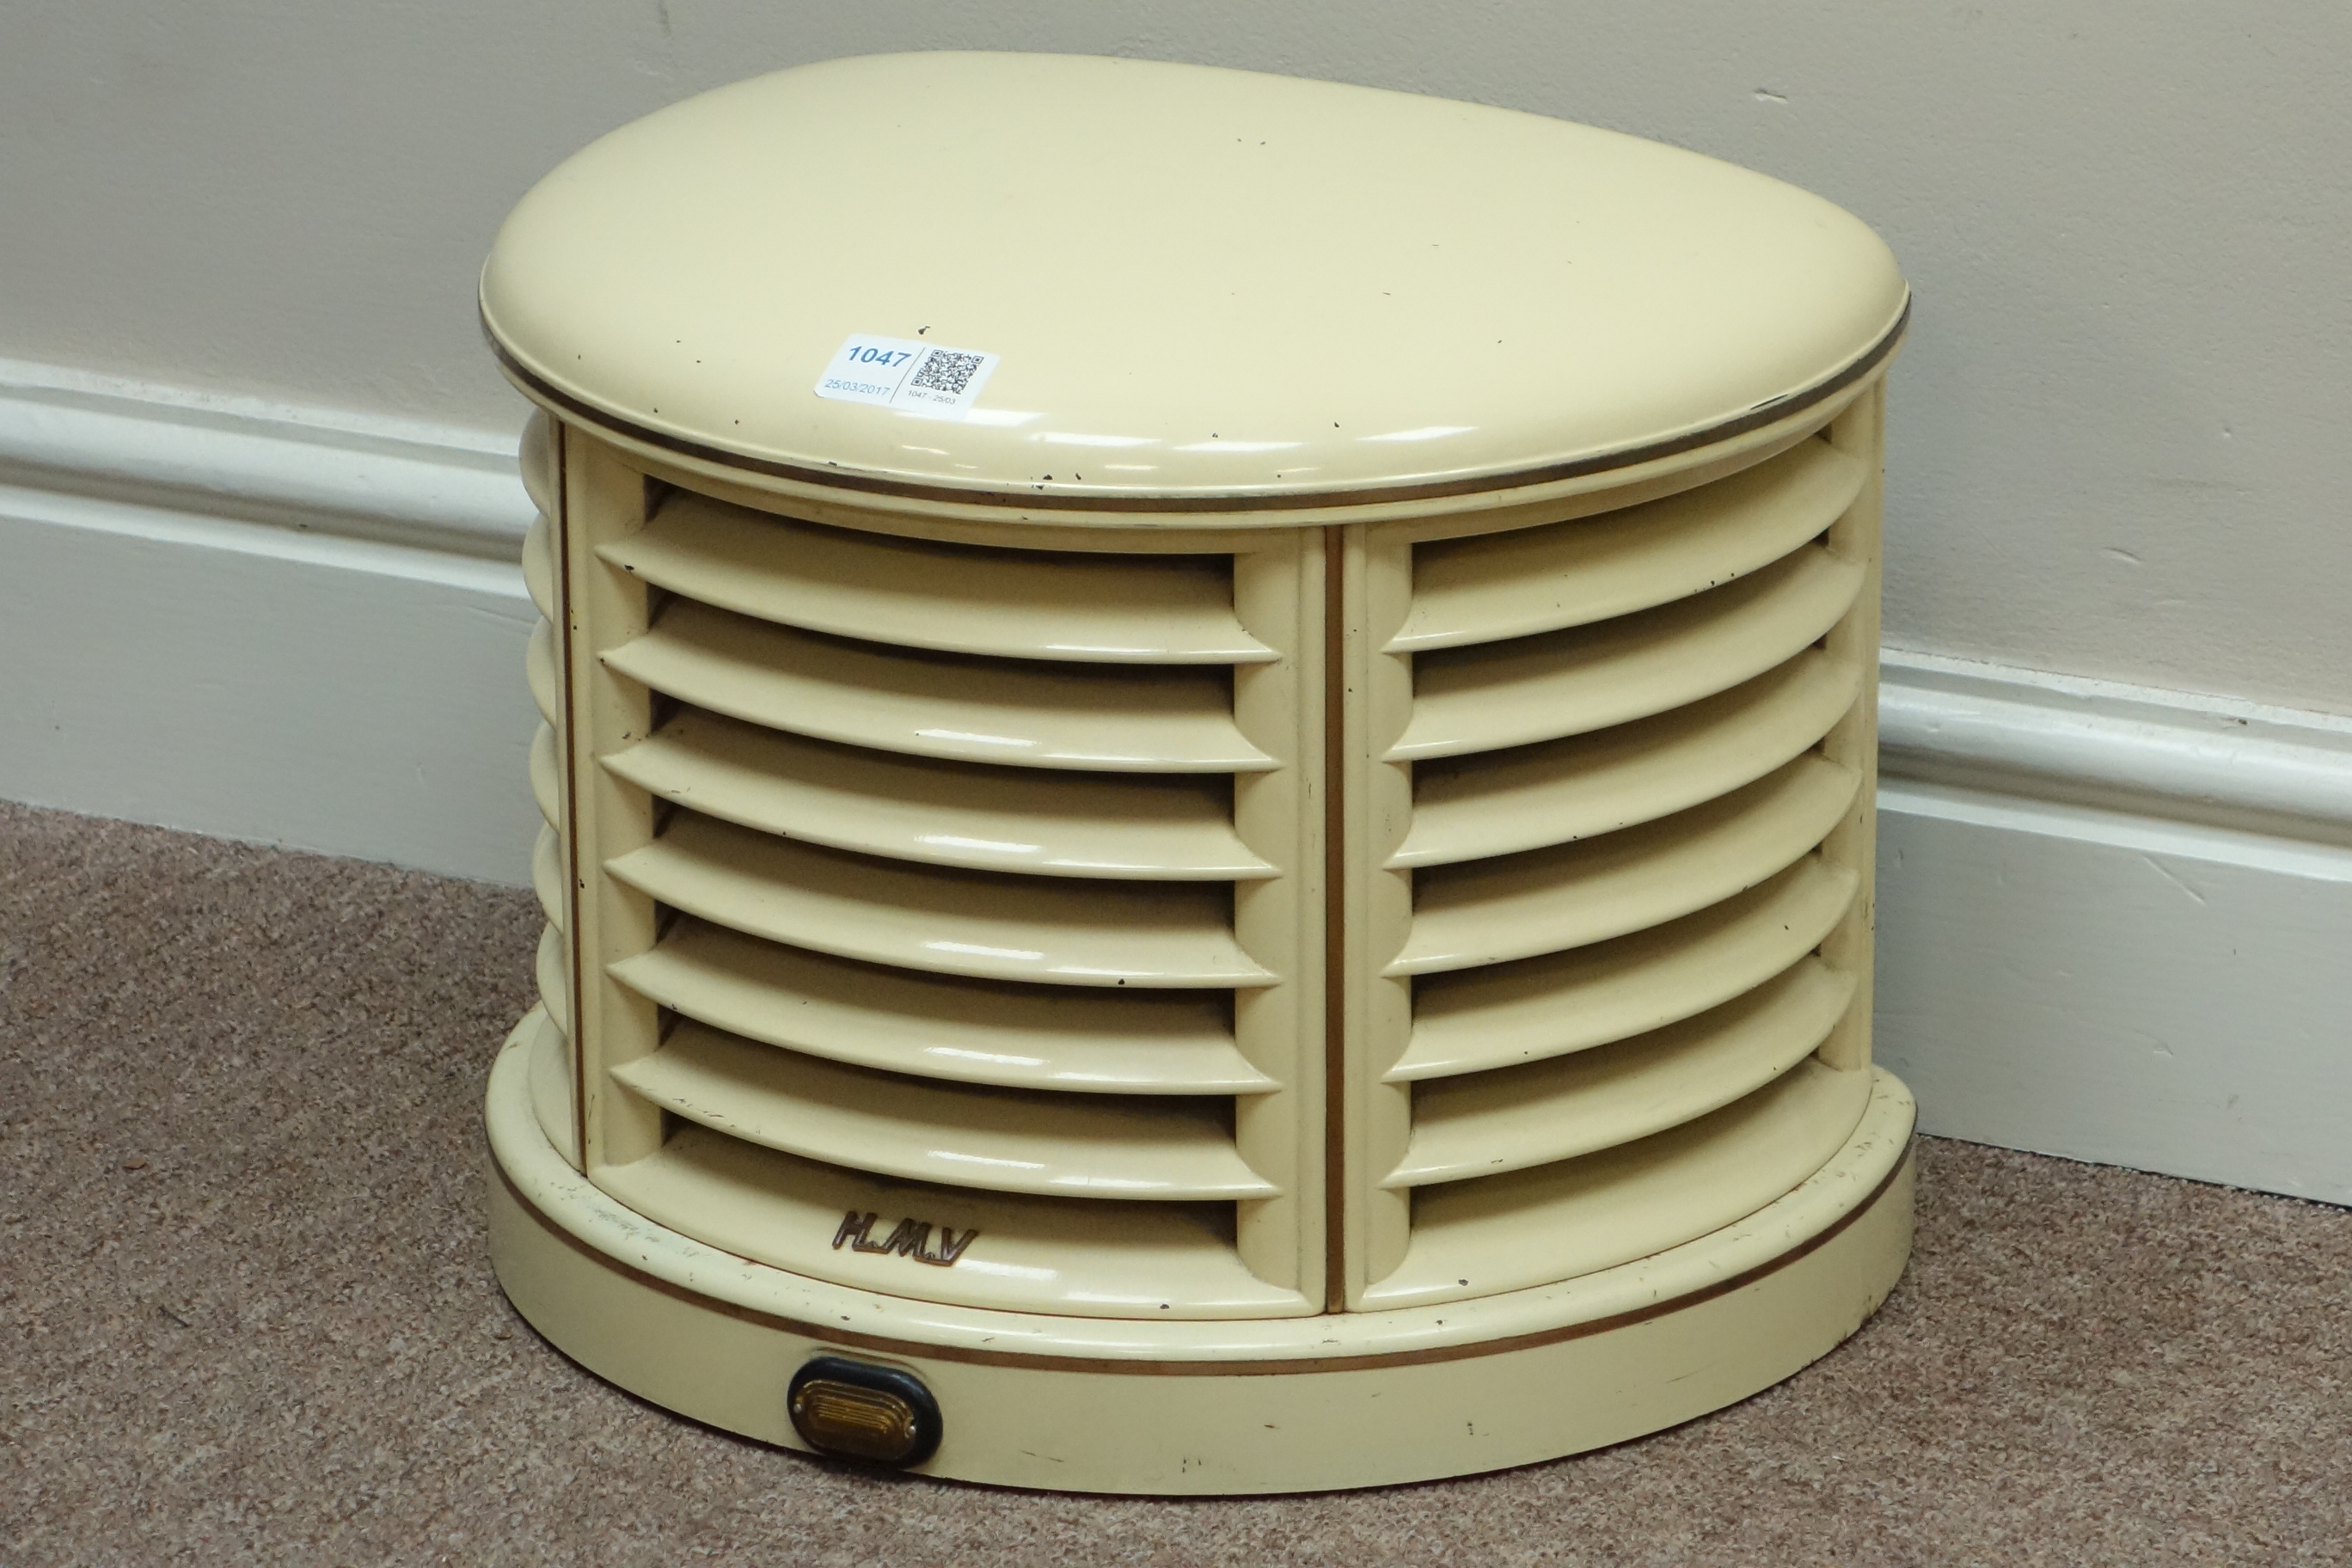 1930s HMV vintage retro electric fan heater,